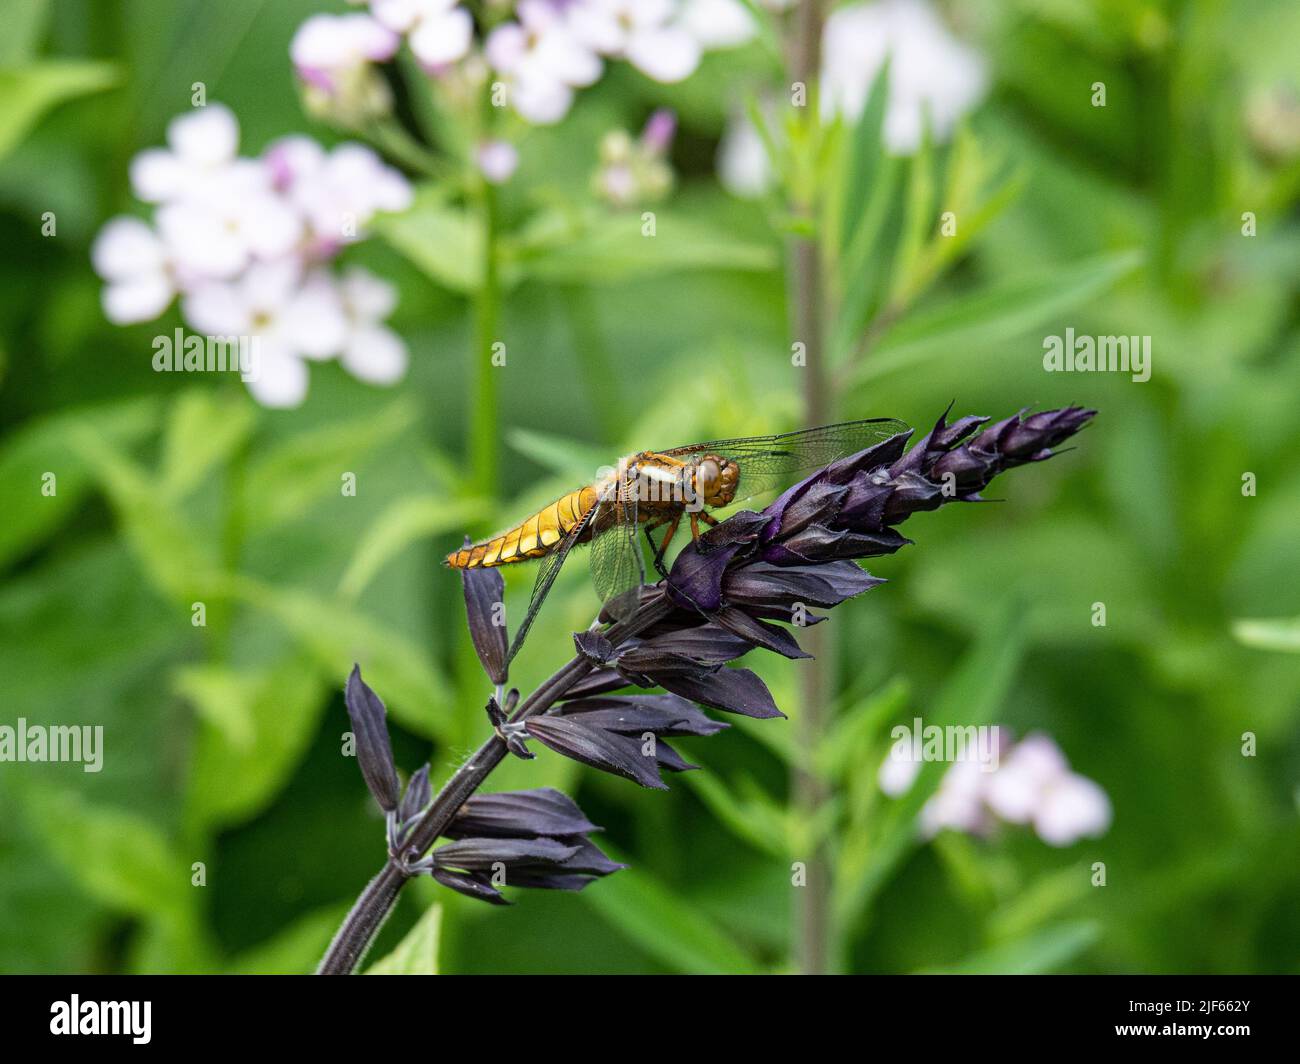 Libélula depressa (Libellula depressa), una libélula de rayas doradas y negras, descansando sobre una flor de Salvia oscura Foto de stock